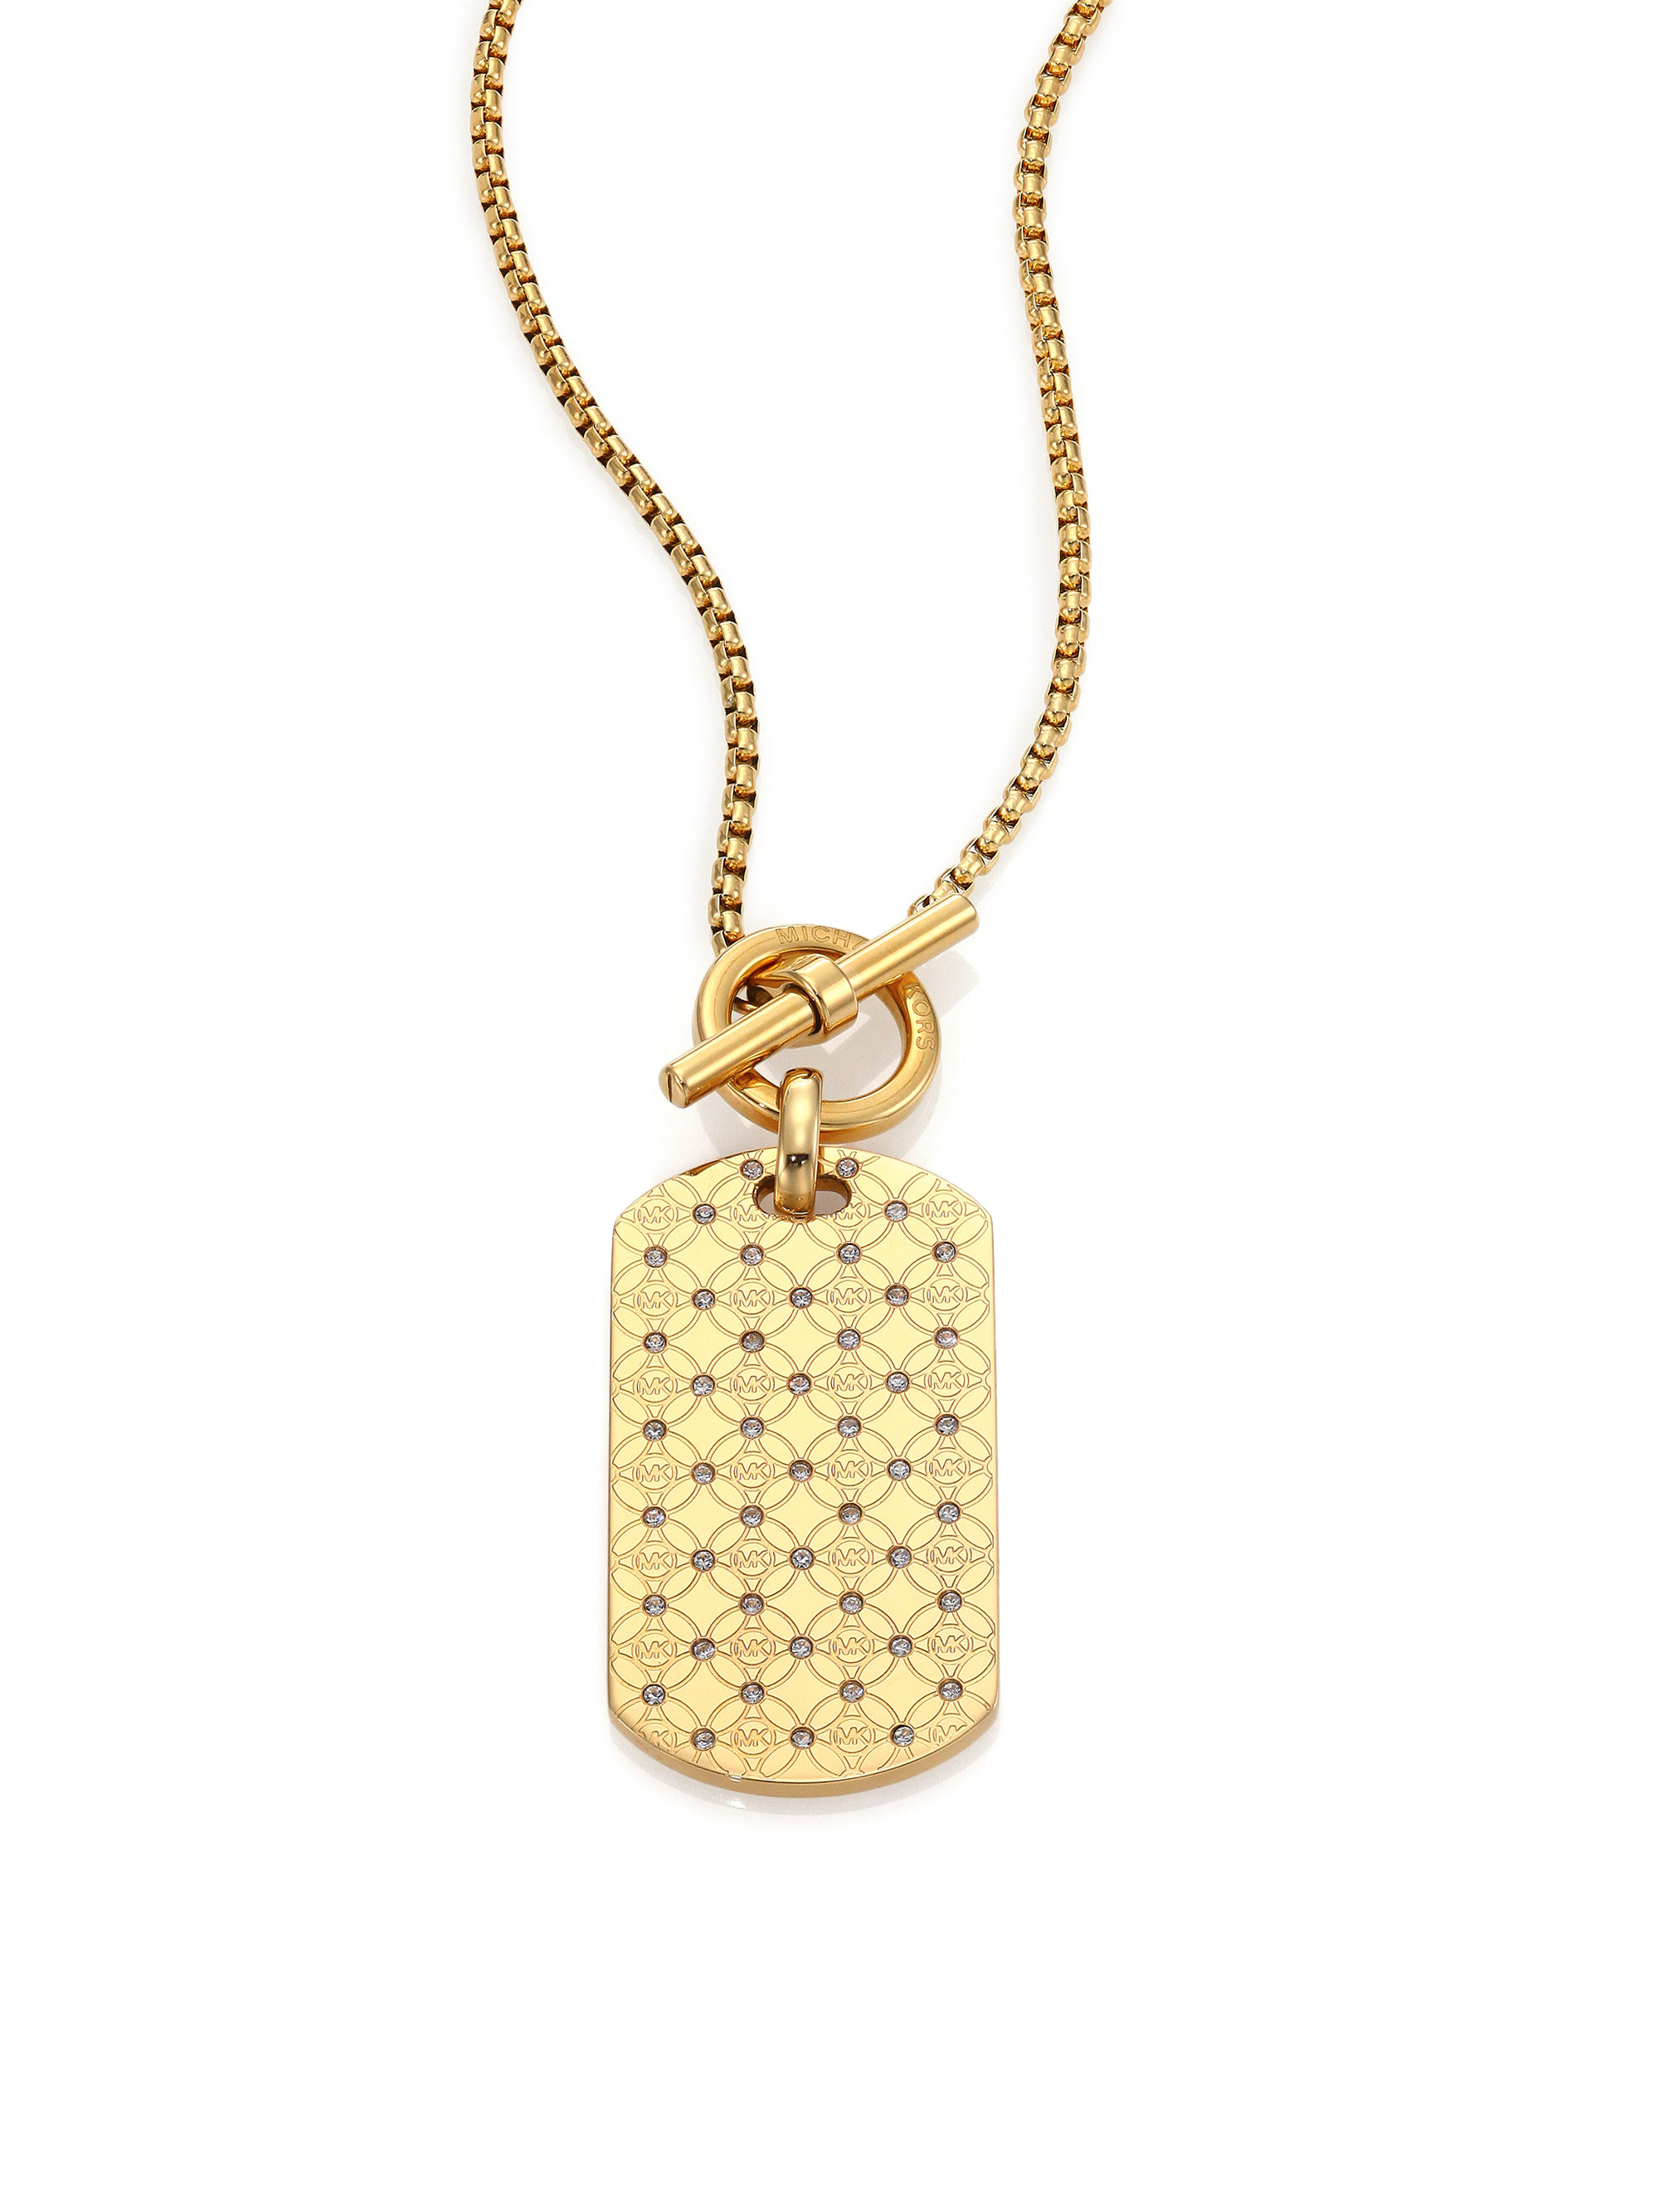 Michael Kors Heritage Monogram Logo Dog Tag Necklace in Gold (Metallic) -  Lyst